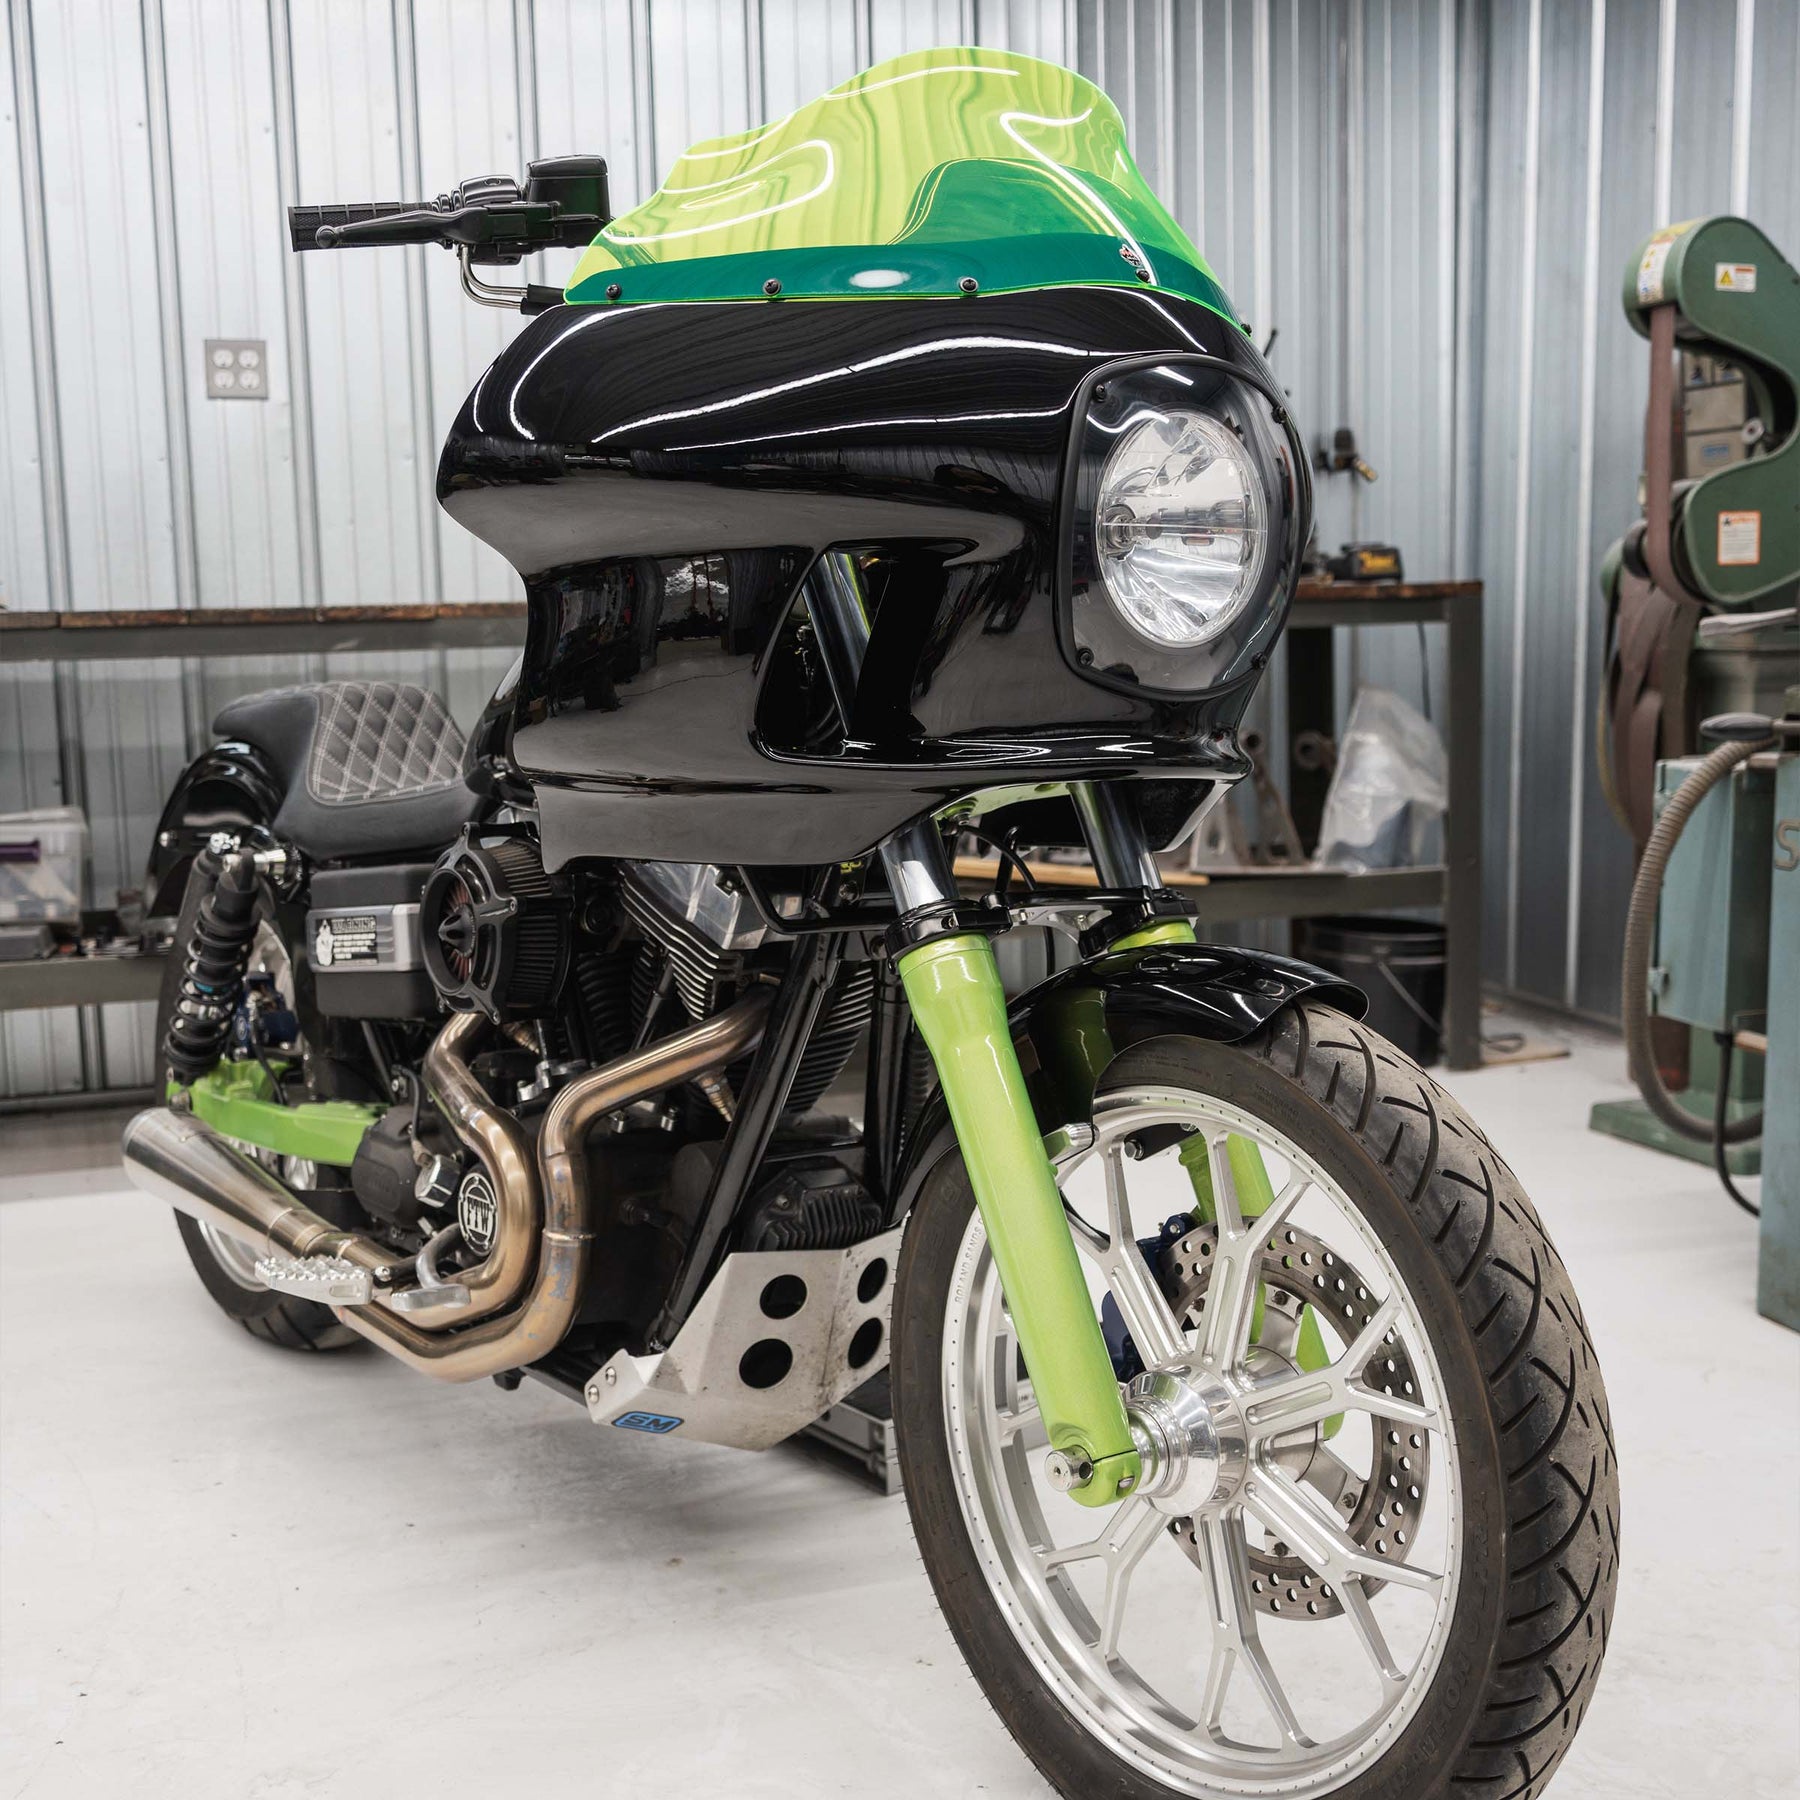 Harley-Davidson FXRP Fairing Fit Kit for newer model Dyna Motorcycles 